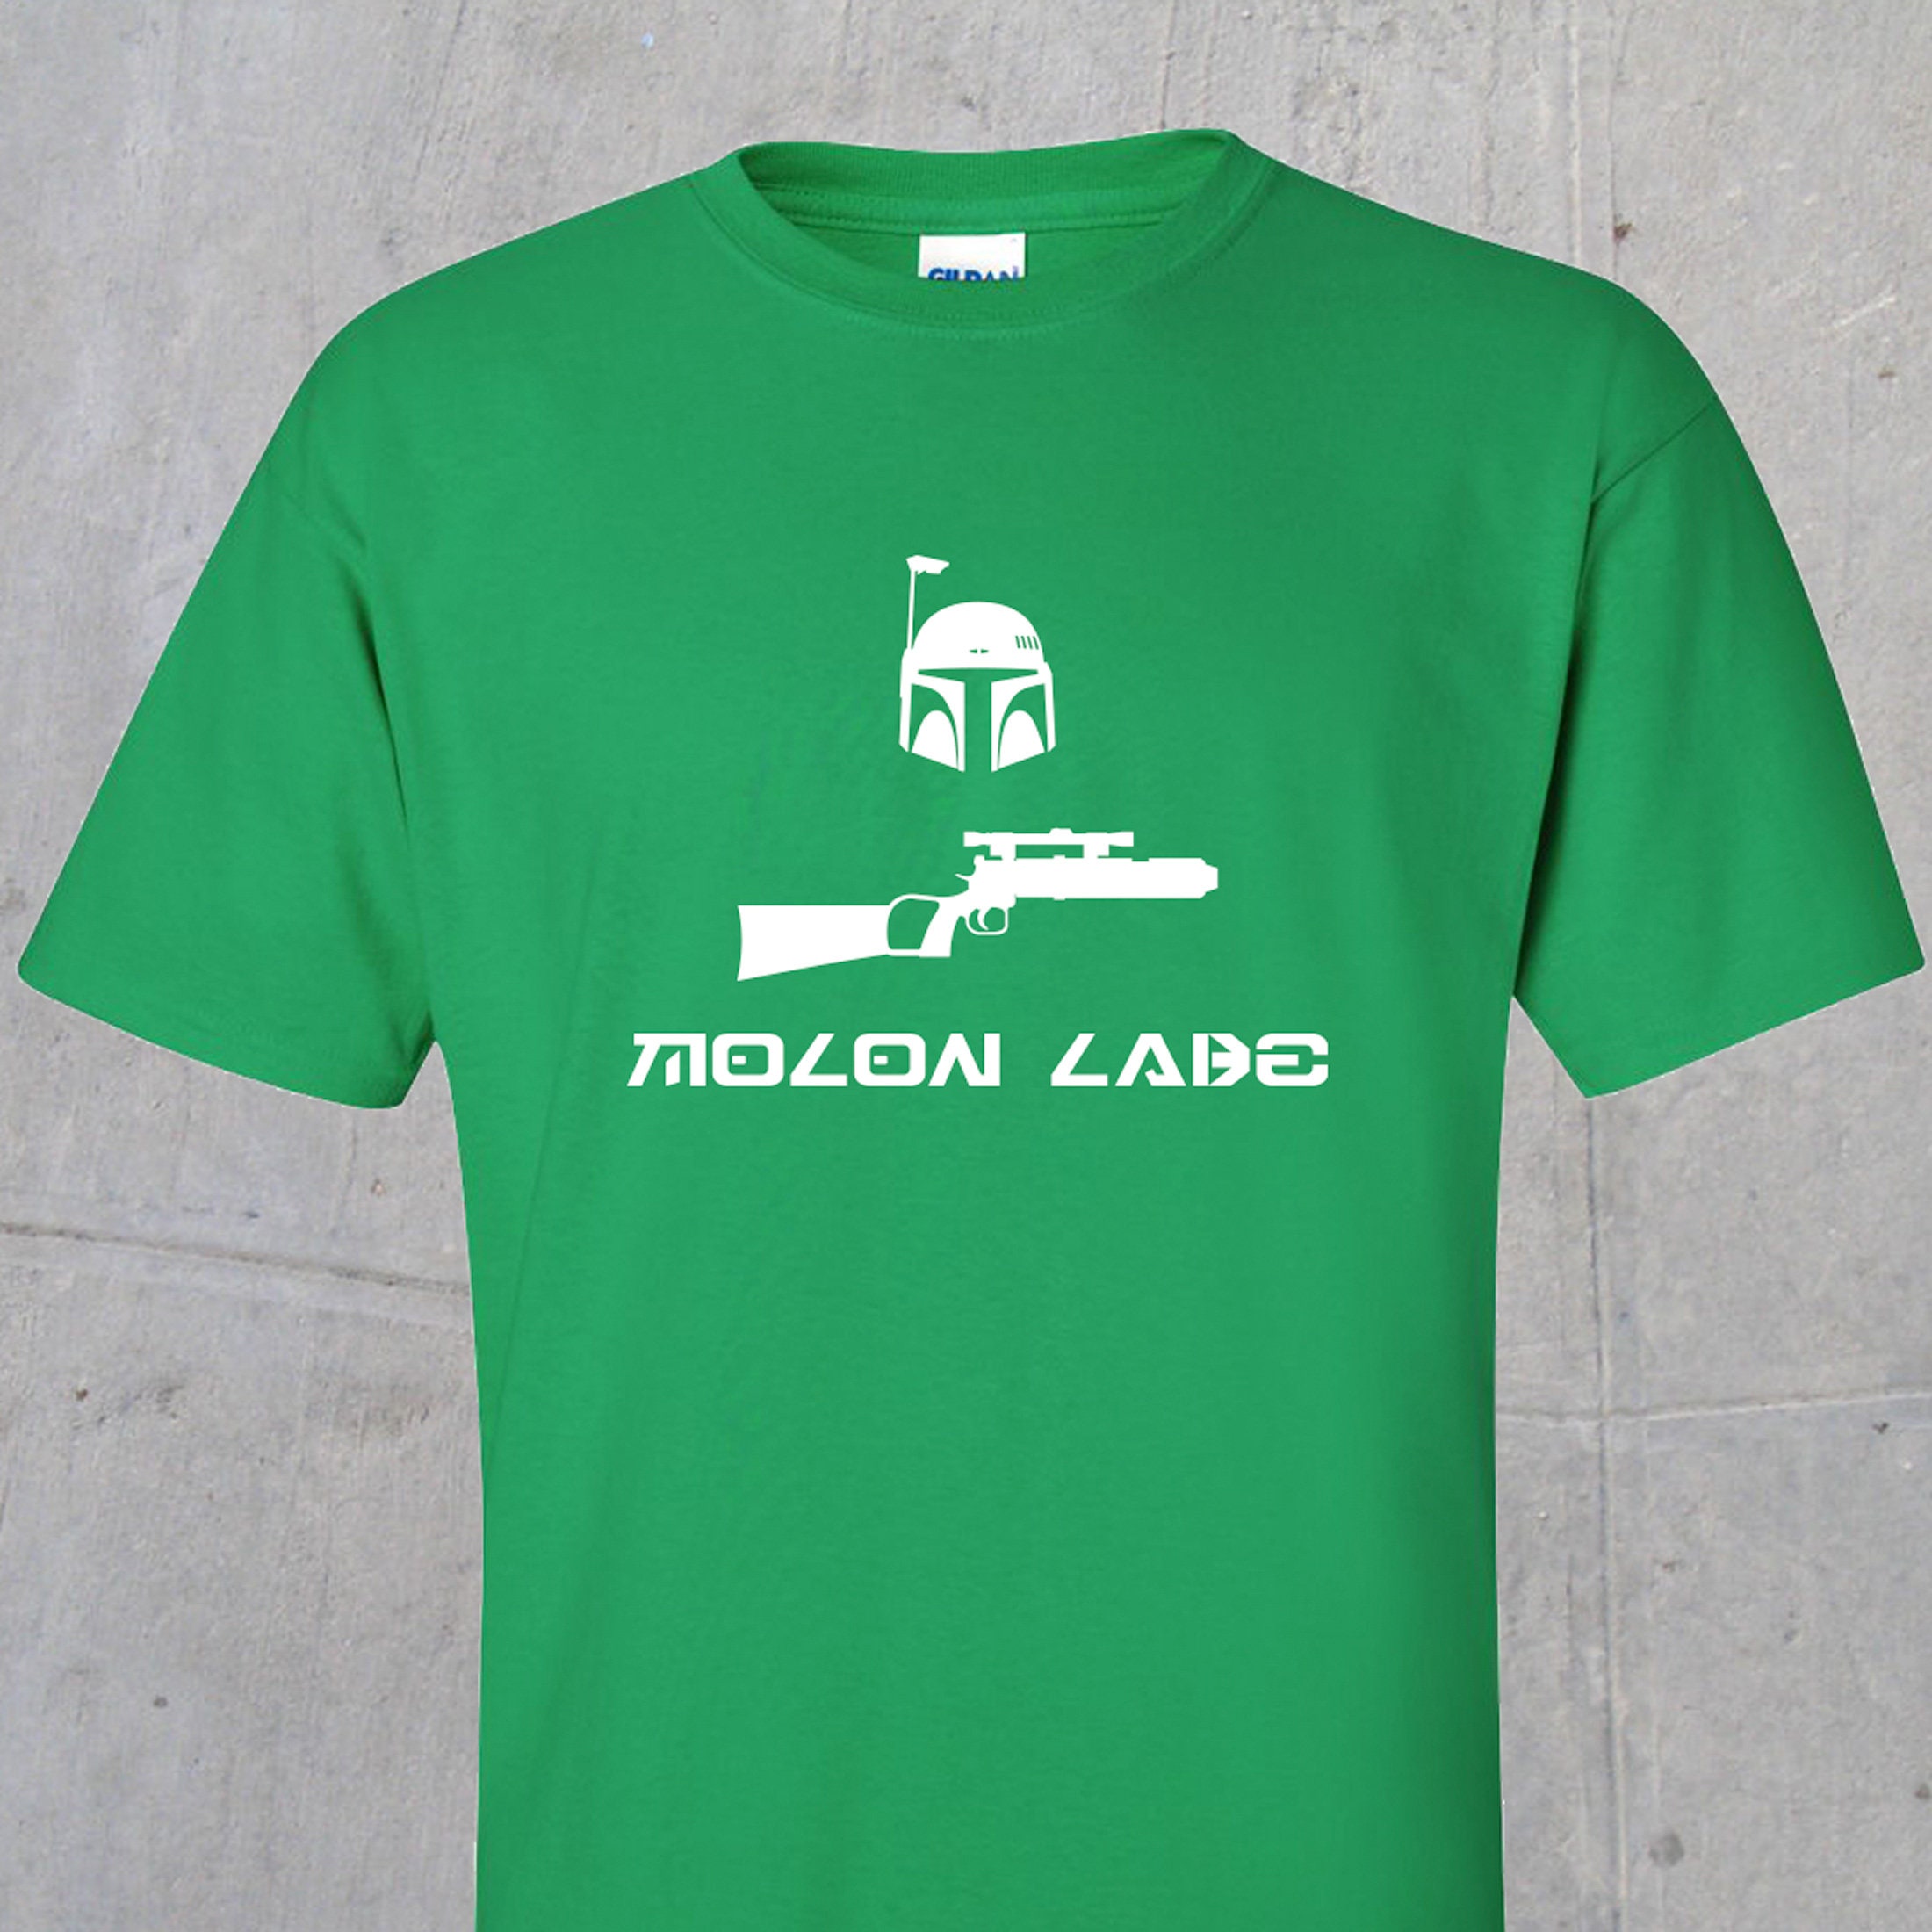 Molon Labe Come and Take Spartan 2nd amendment  T shirt  s m l xl 2x 3x 4x 5x 